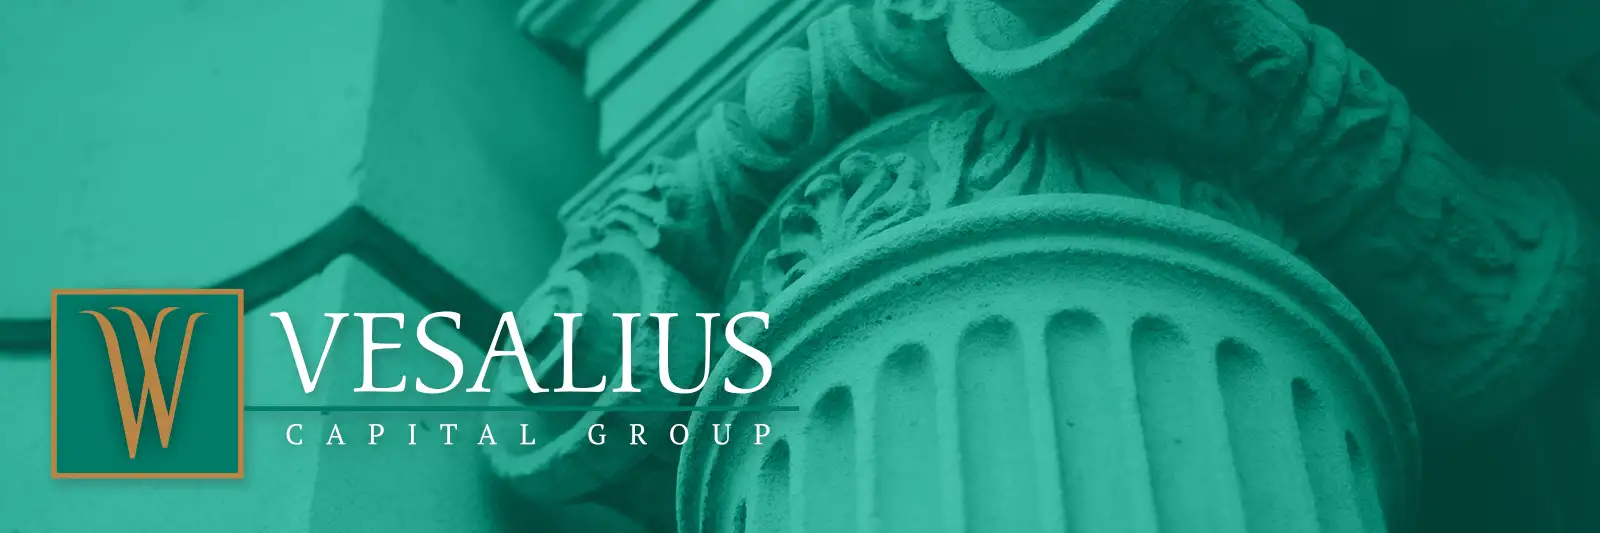 Vesalius Capital Group logo